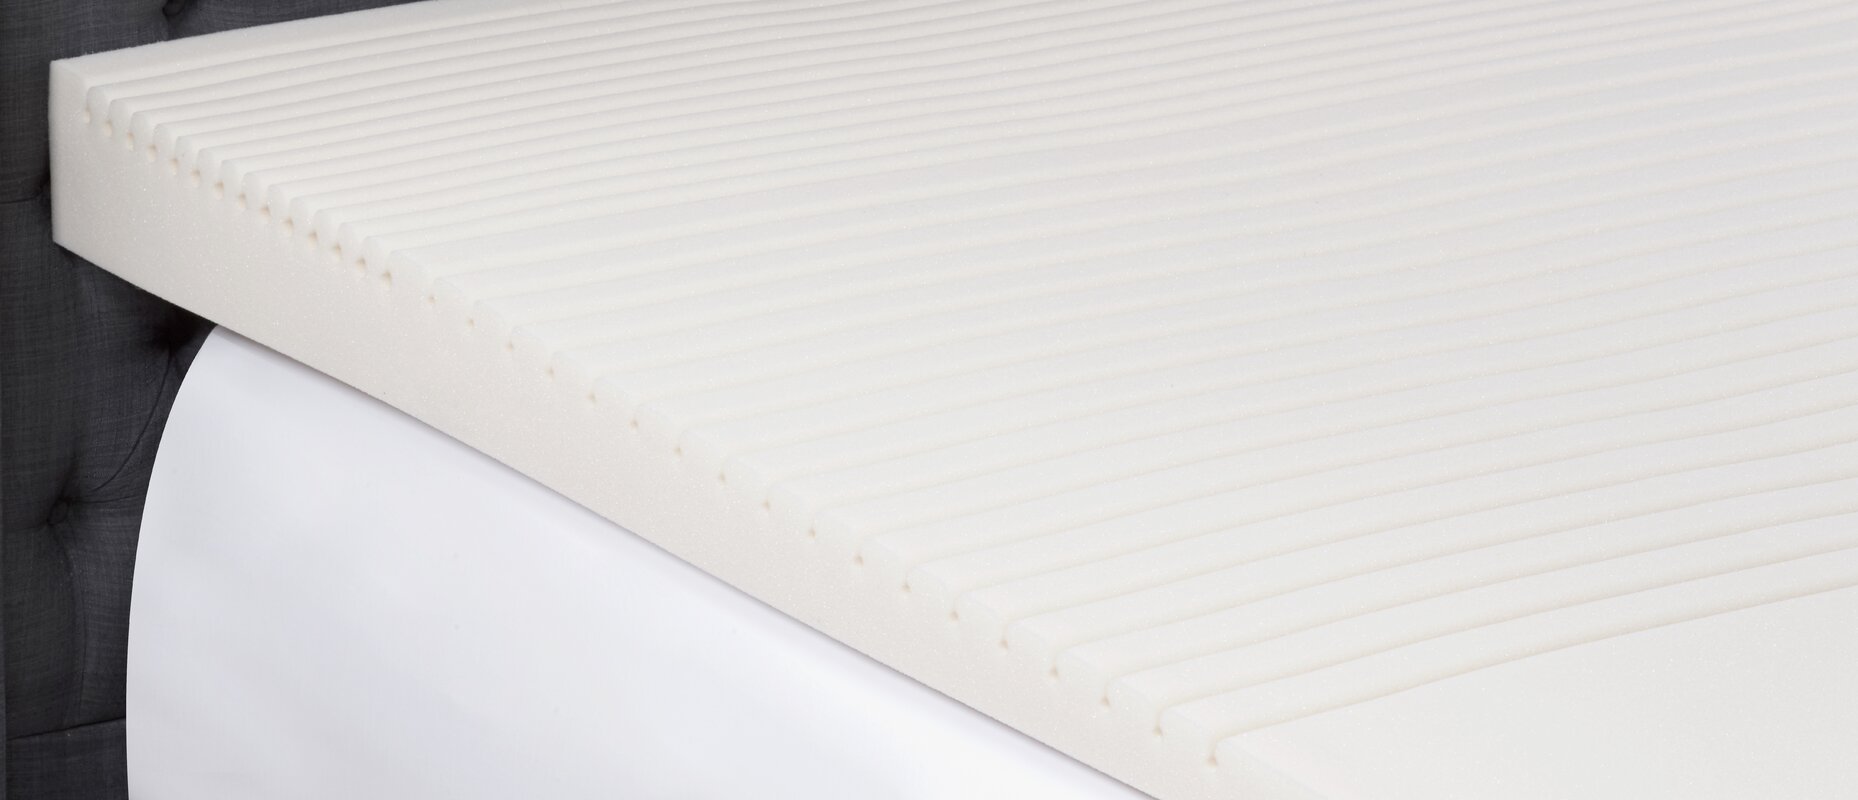 5.5 memory foam mattress topper